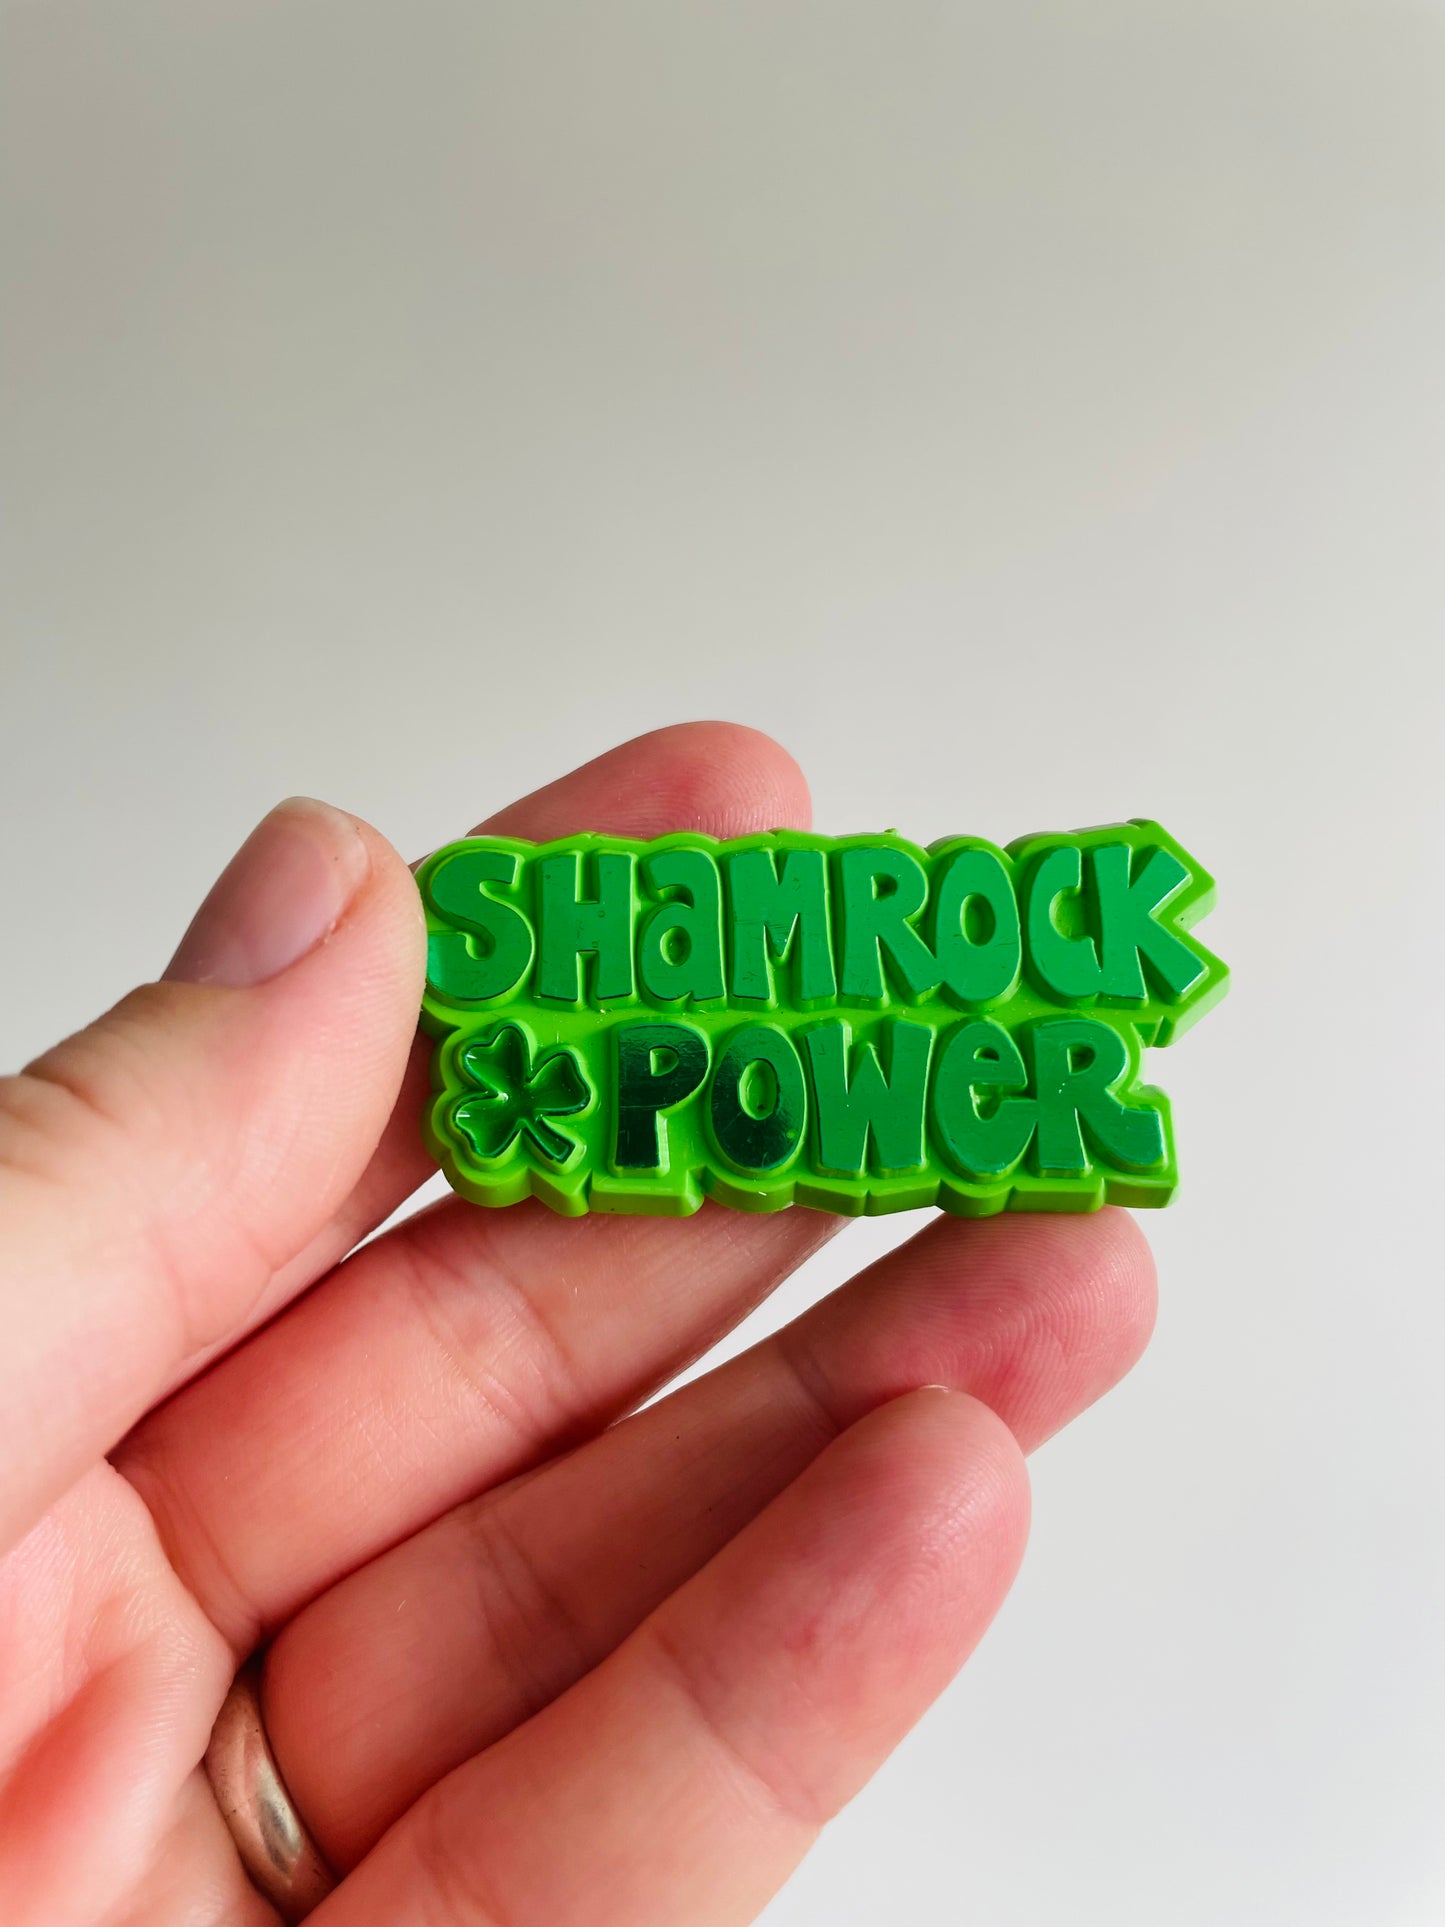 St. Patrick's Day Holiday Pin - Shamrock Power - Hallmark Cards Inc.